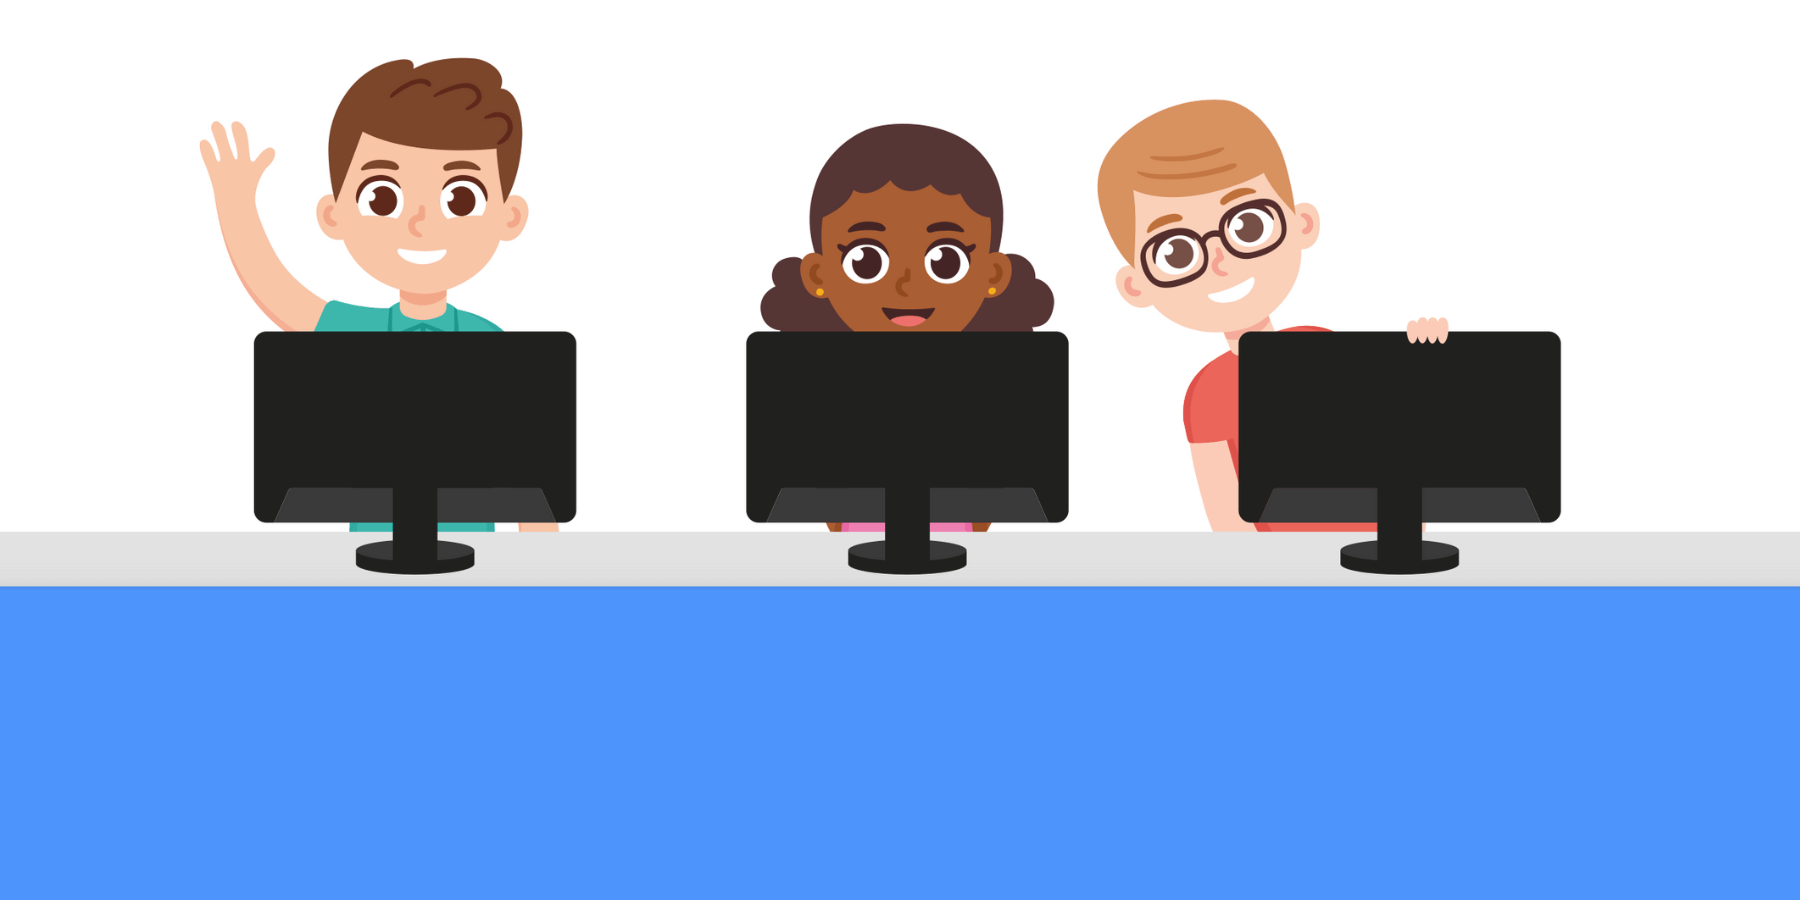 Illustrated children sat behind computer screens